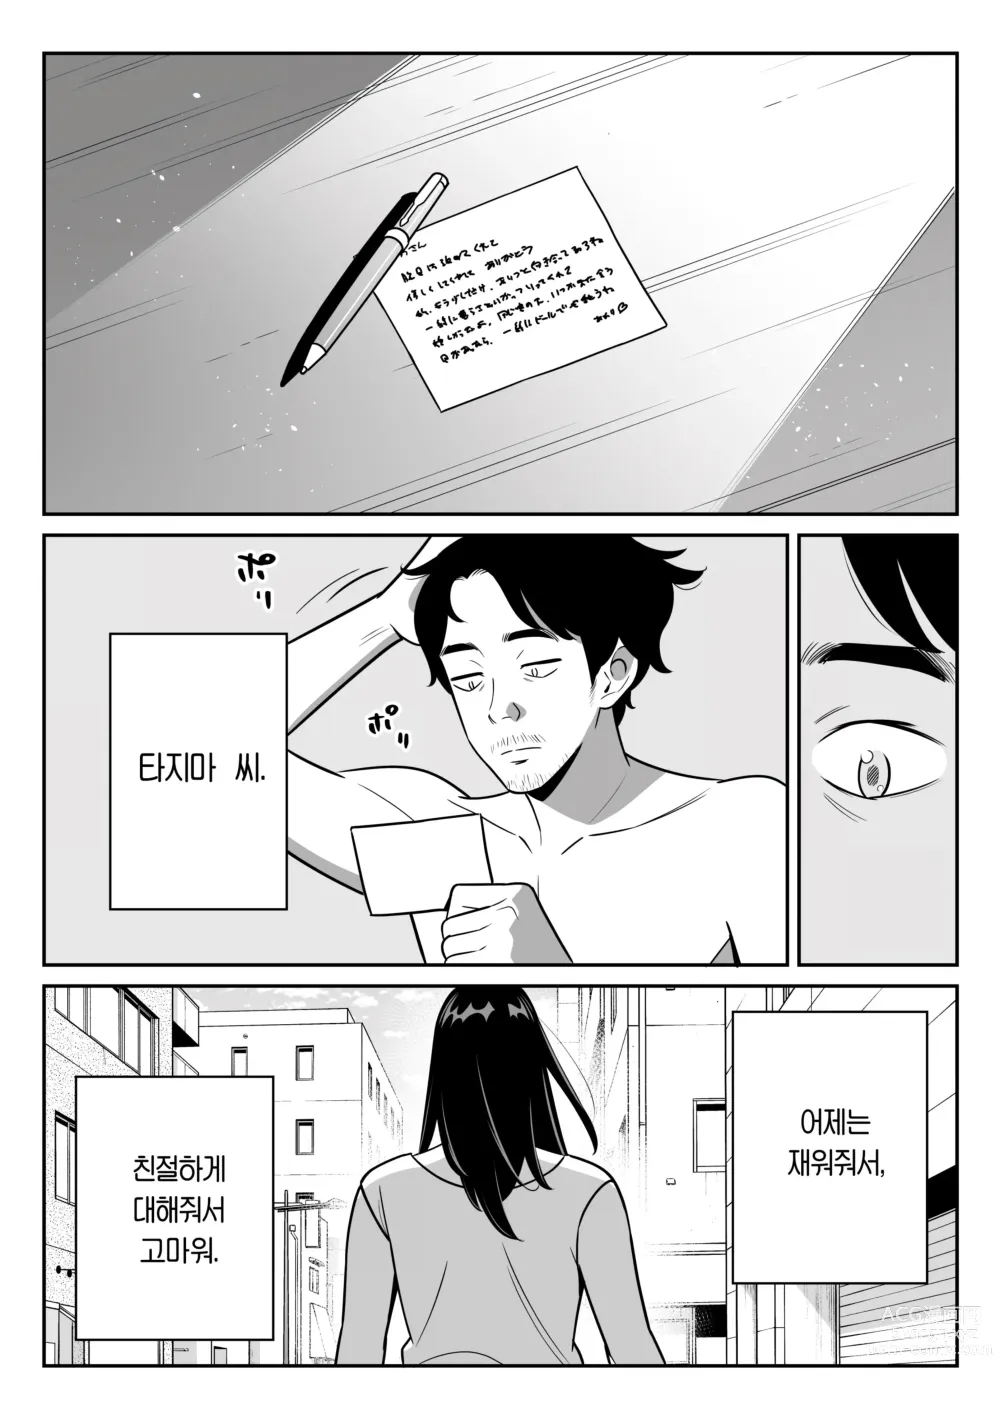 Page 52 of doujinshi Zoku【Rouhou】Gekiyasu Fuuzoku de Ooatari Hiita www 속【낭보】 싸구려 풍속에서 대박을 뽑았다ㅋㅋㅋ